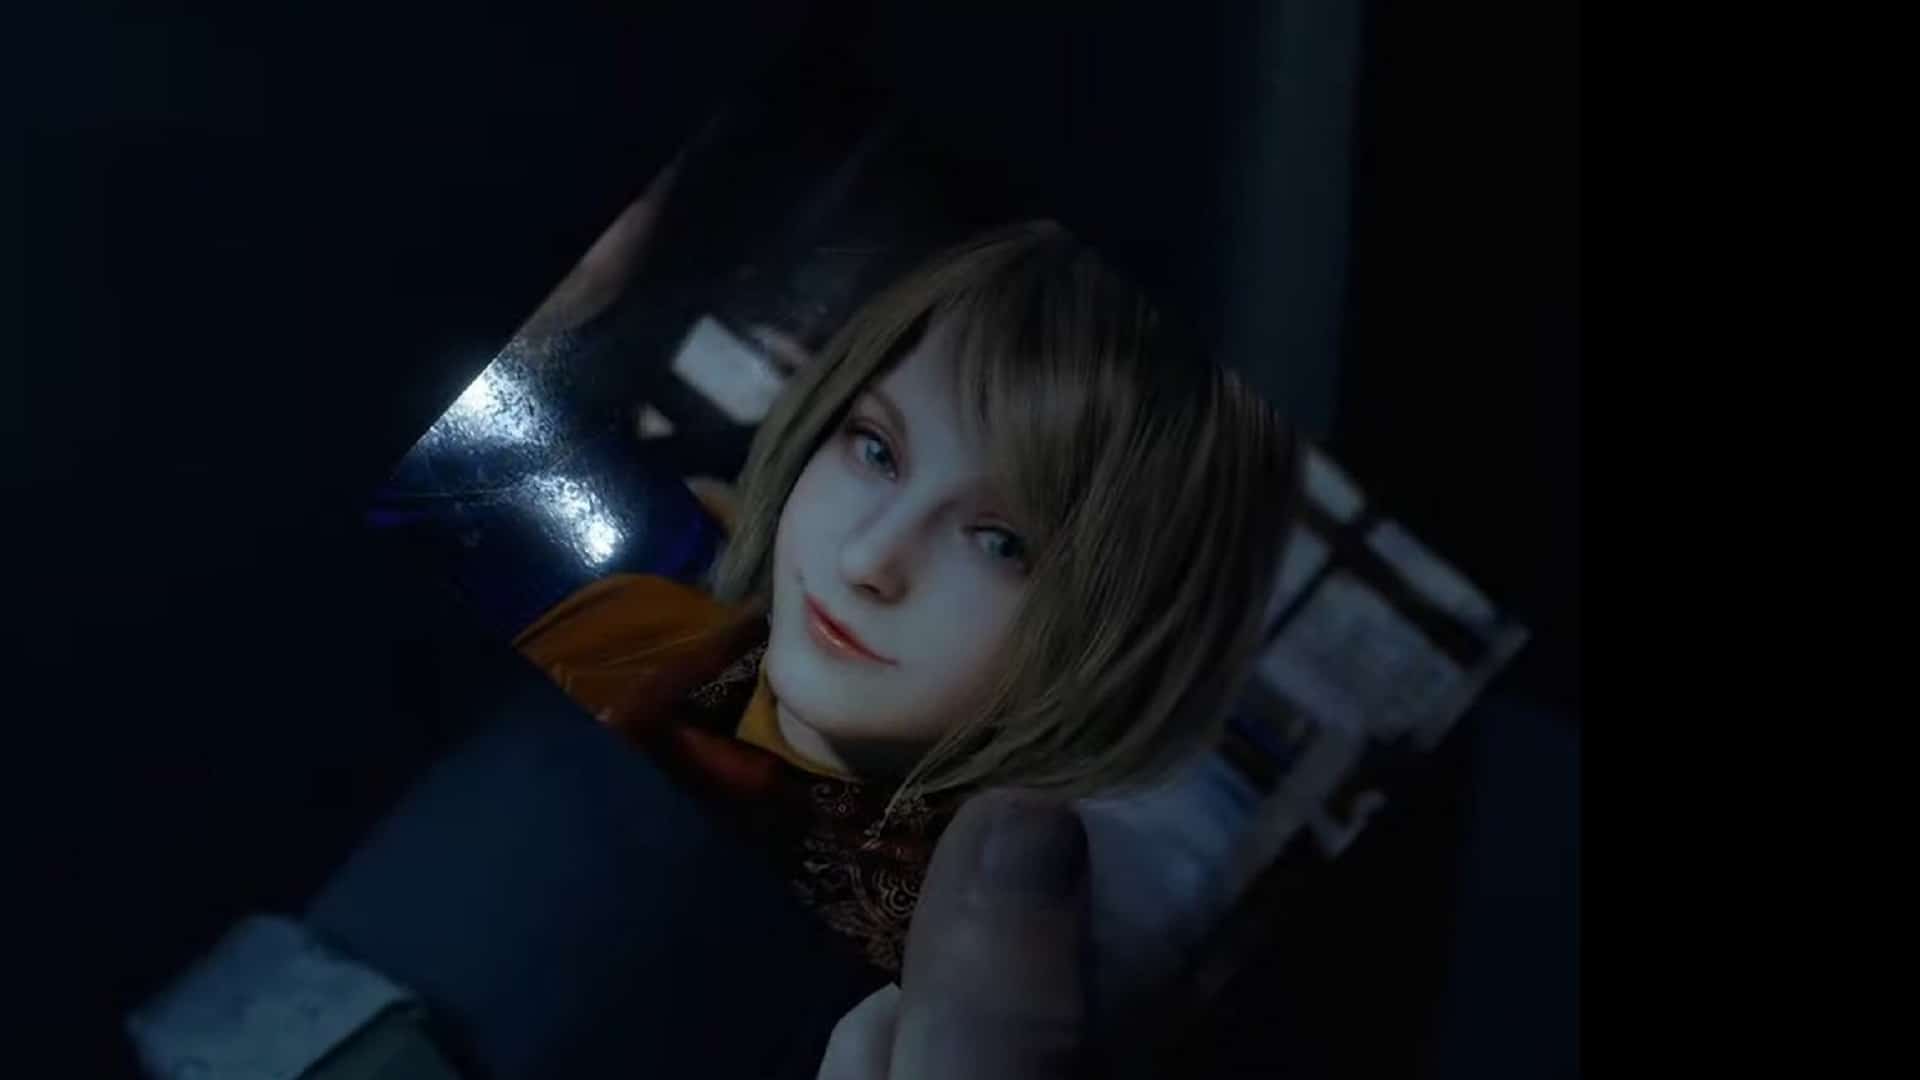 Resident Evil 4 Remake's Ashley Face Model Confirmed As Ella Freya -  PlayStation Universe